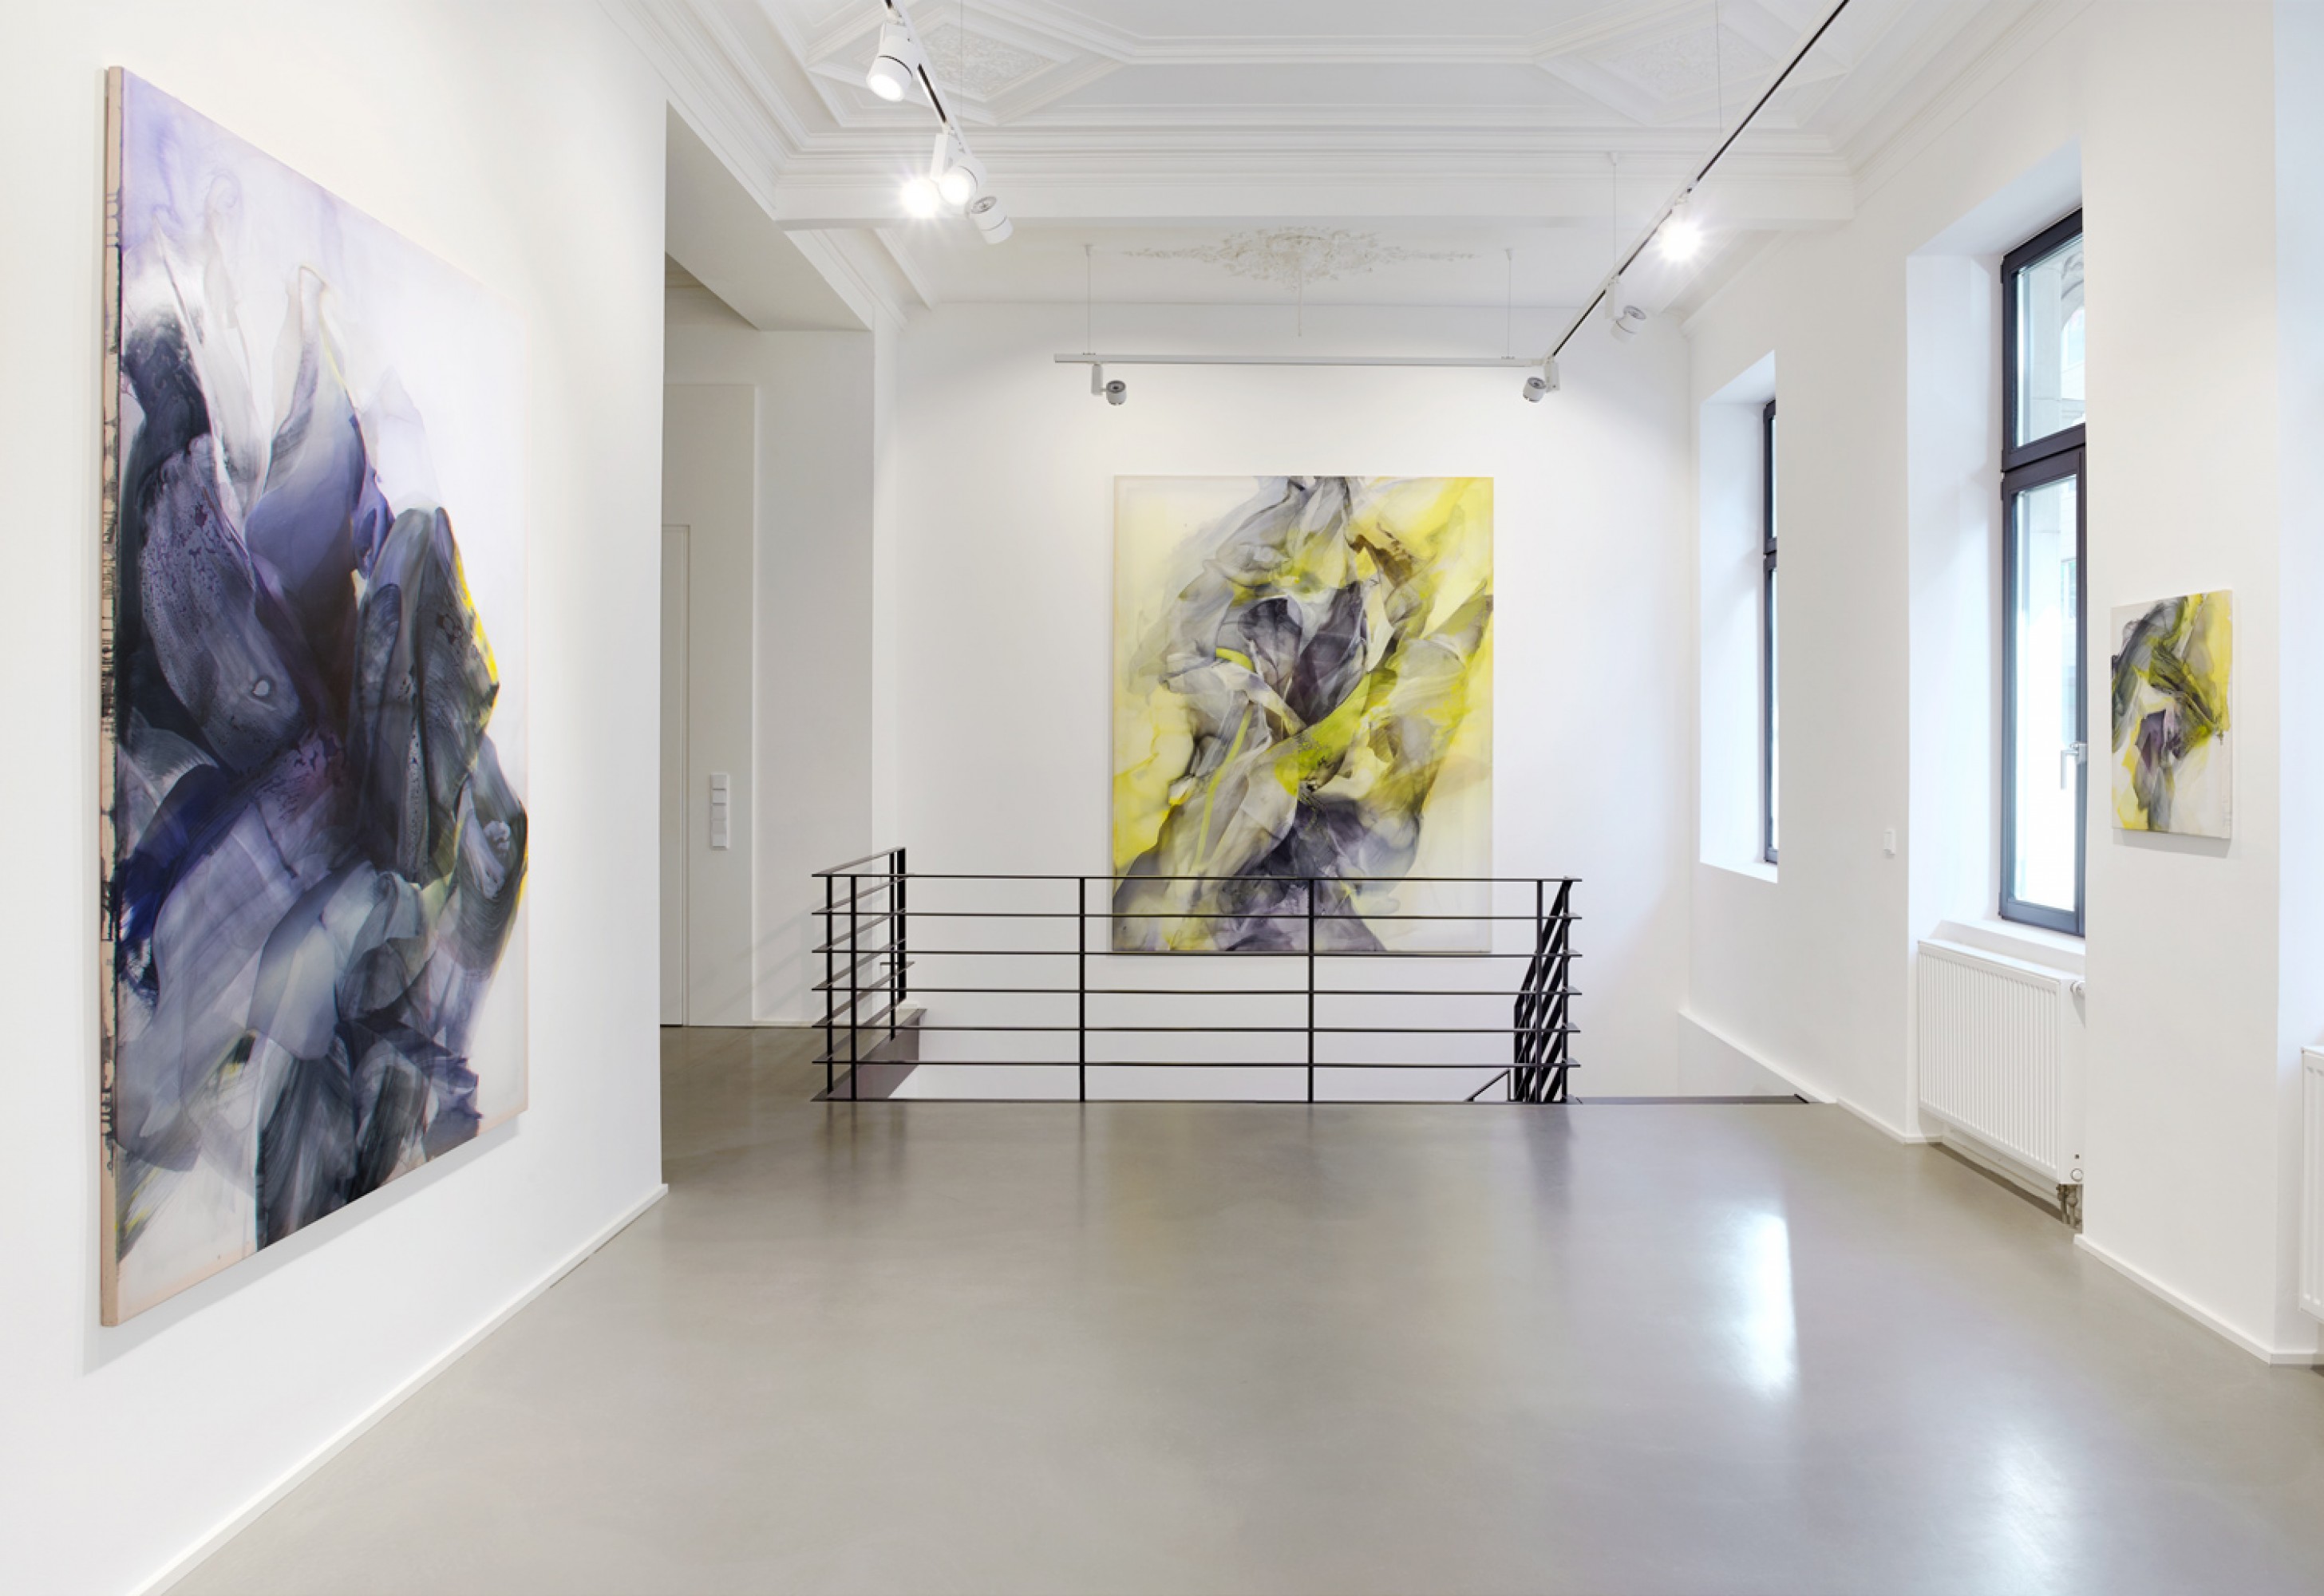 Natascha Schmitten - Installation view "PHOSPHOR", 2018, Galerie Christian Lethert, Cologne, DE